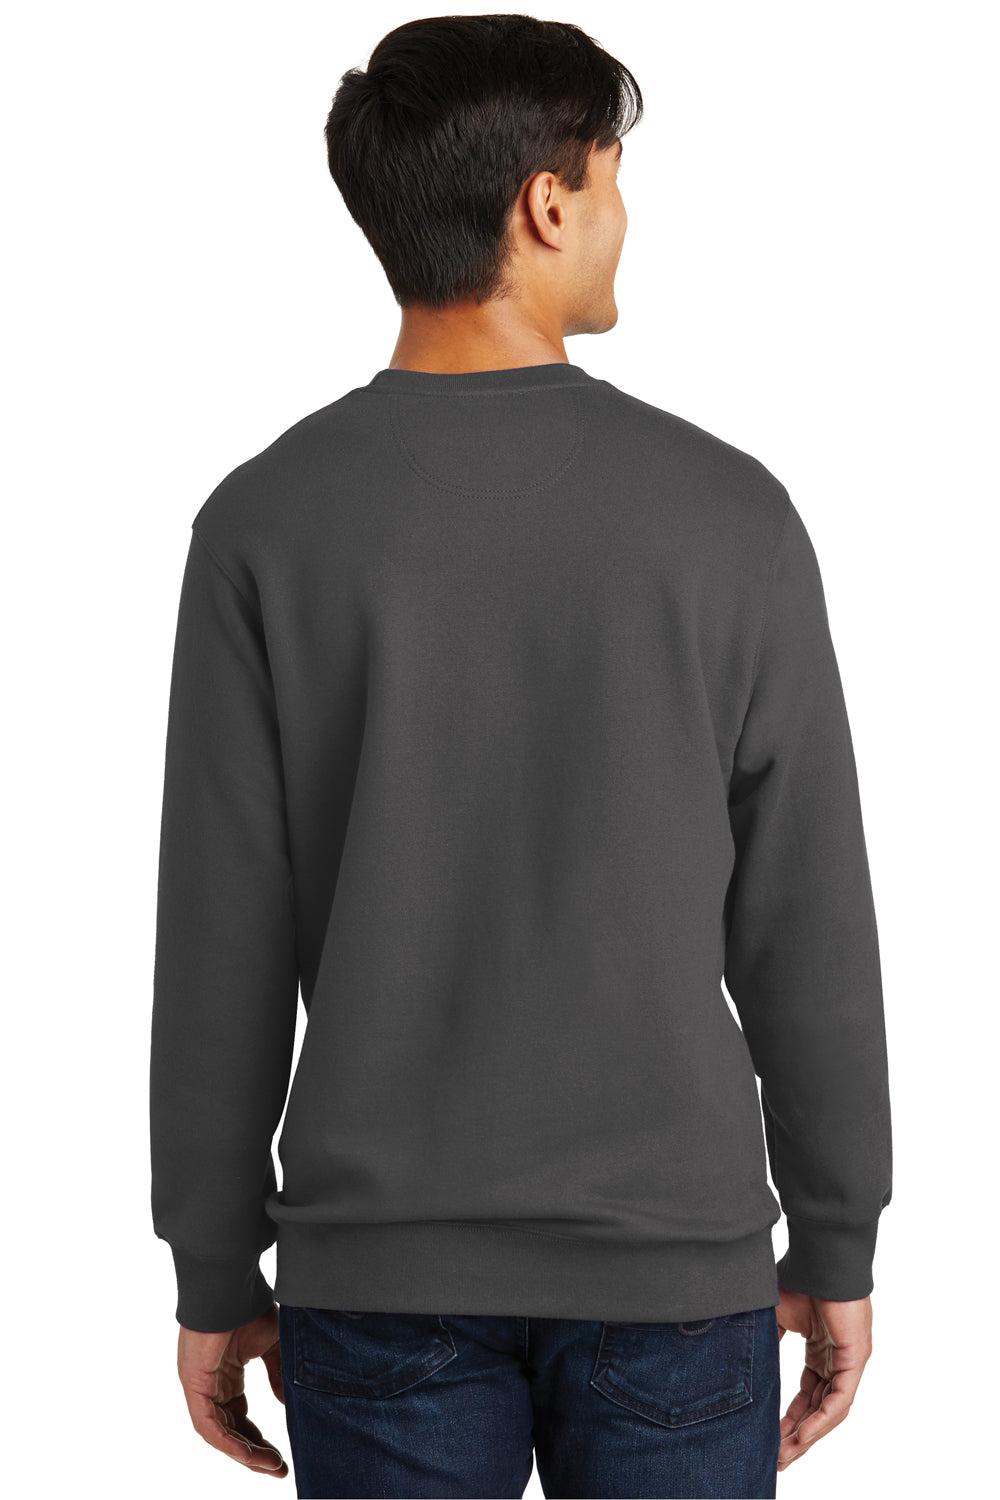 Port & Company PC850 Mens Fan Favorite Fleece Crewneck Sweatshirt Charcoal Grey Back